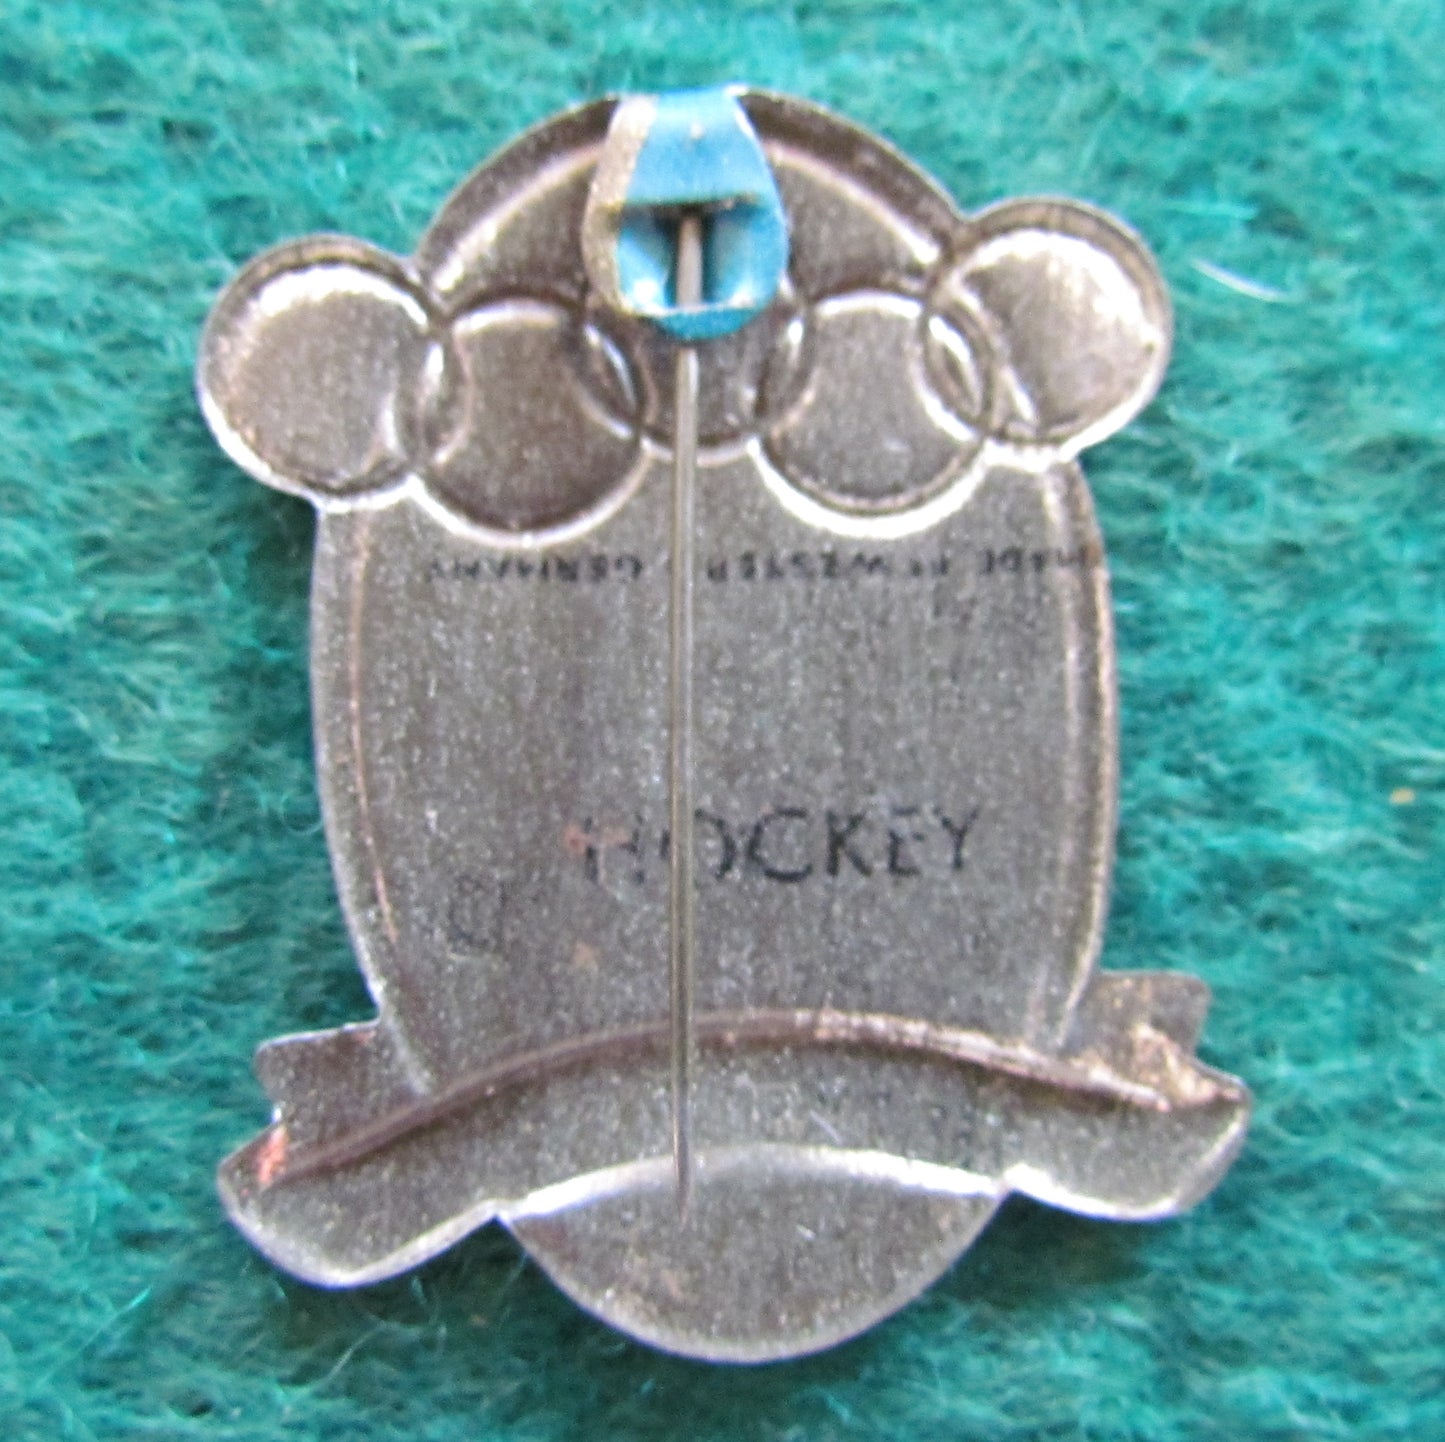 Australian Melbourne 1956 Olympic Hockey Tin Badge